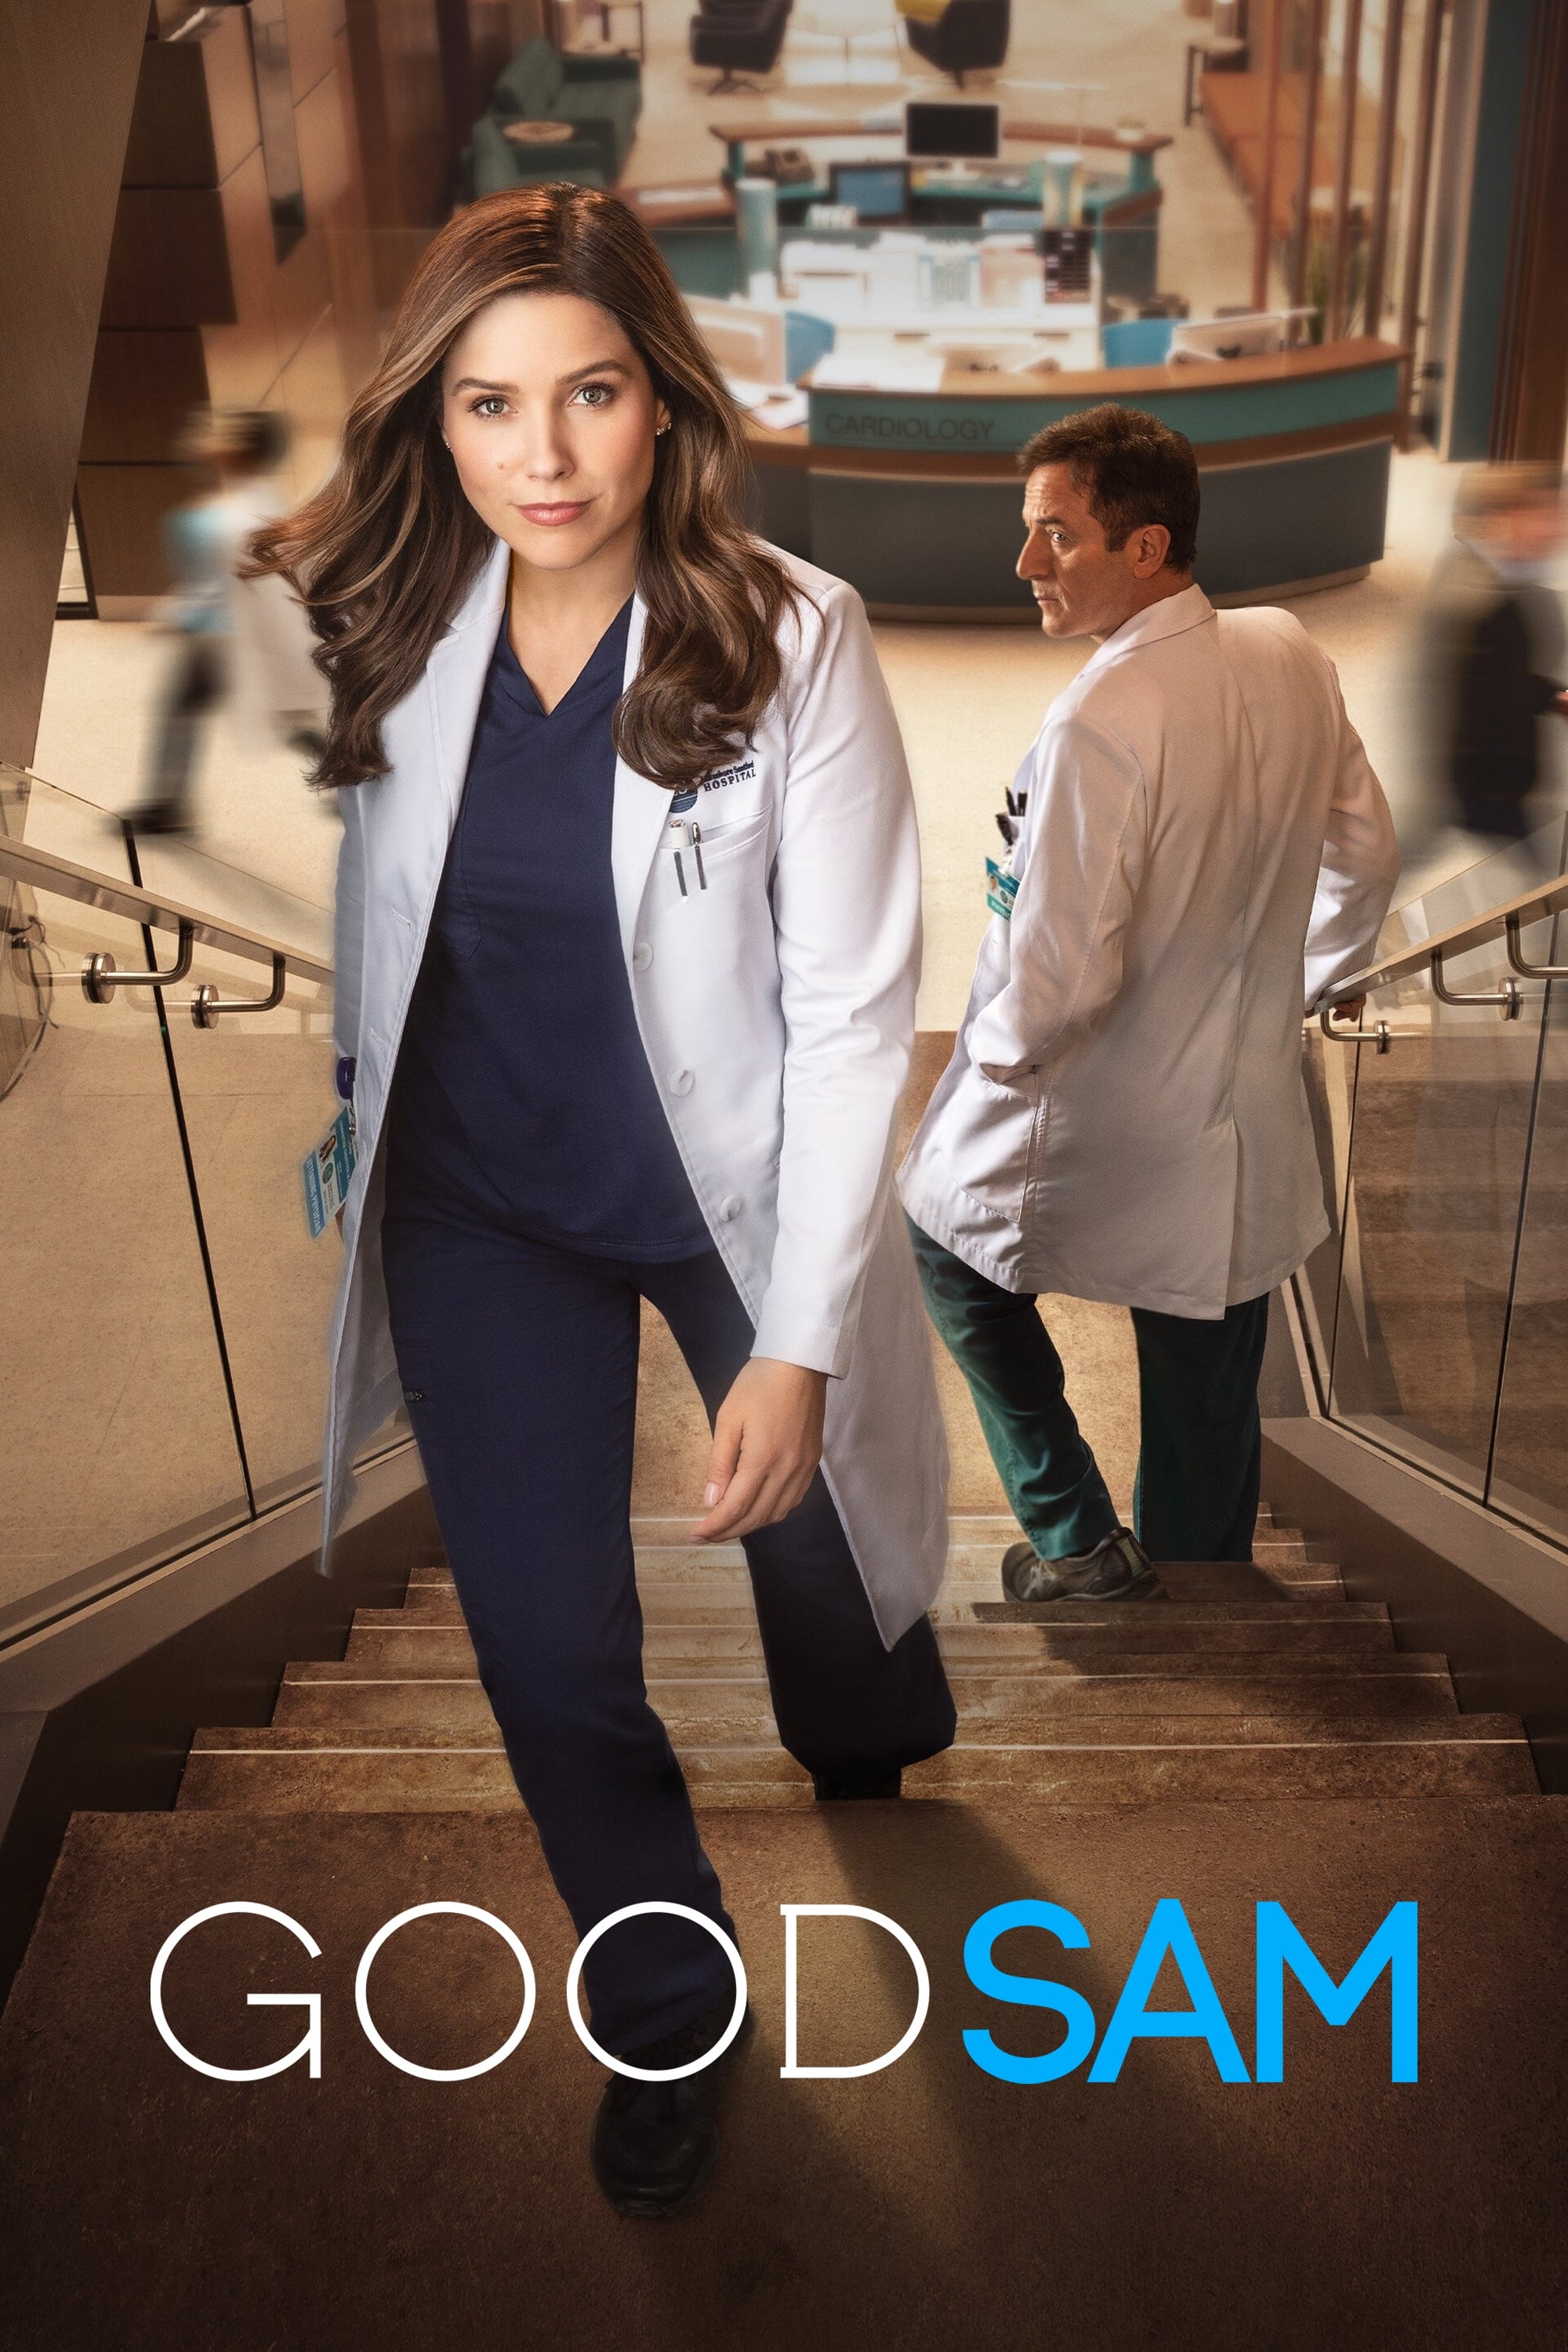 Good Sam TV Shows About Medical Drama